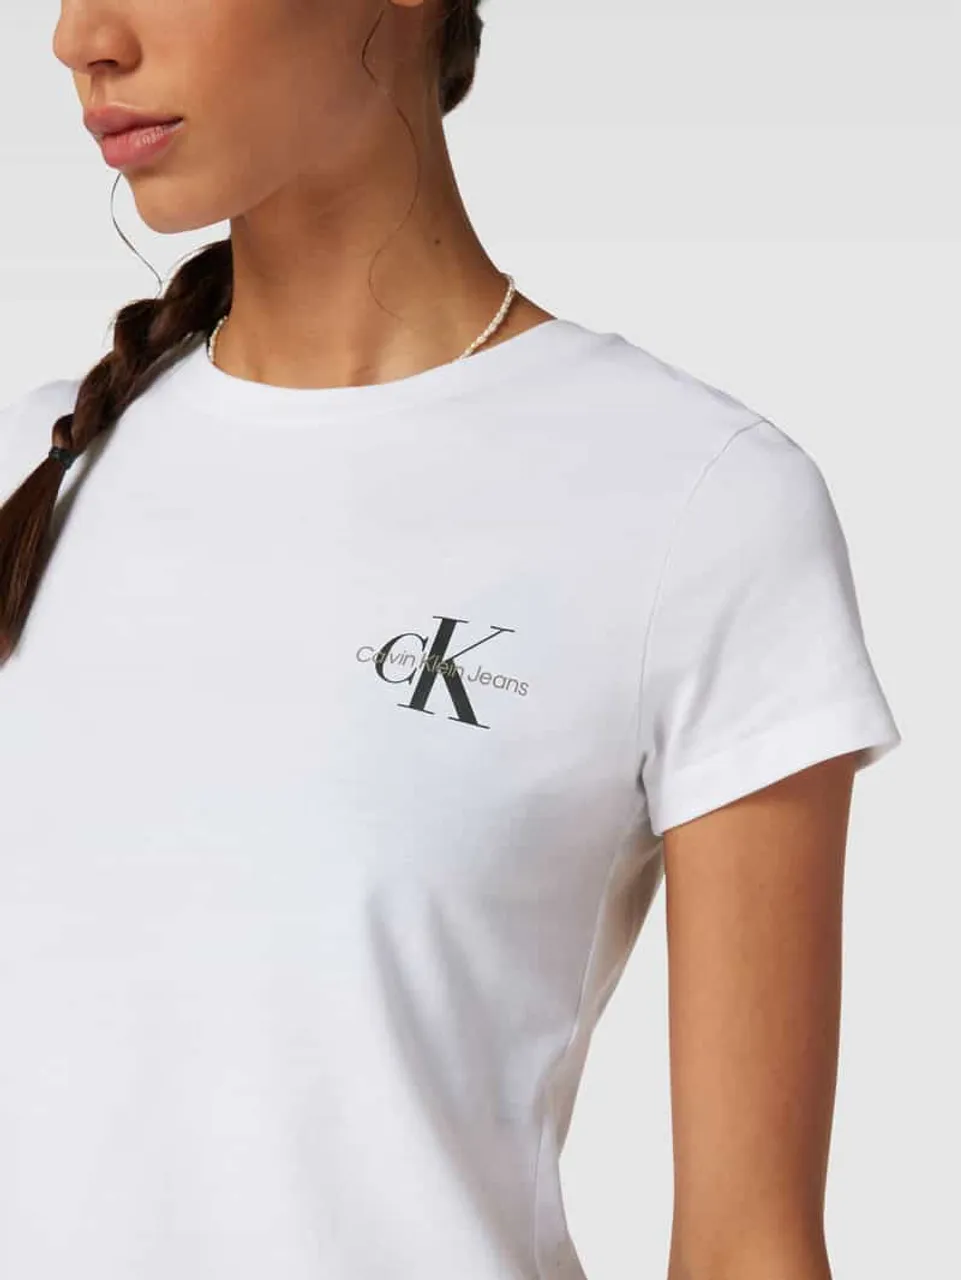 Calvin Klein Jeans Slim Fit T-Shirt mit Label-Print im 2er-Pack in Black